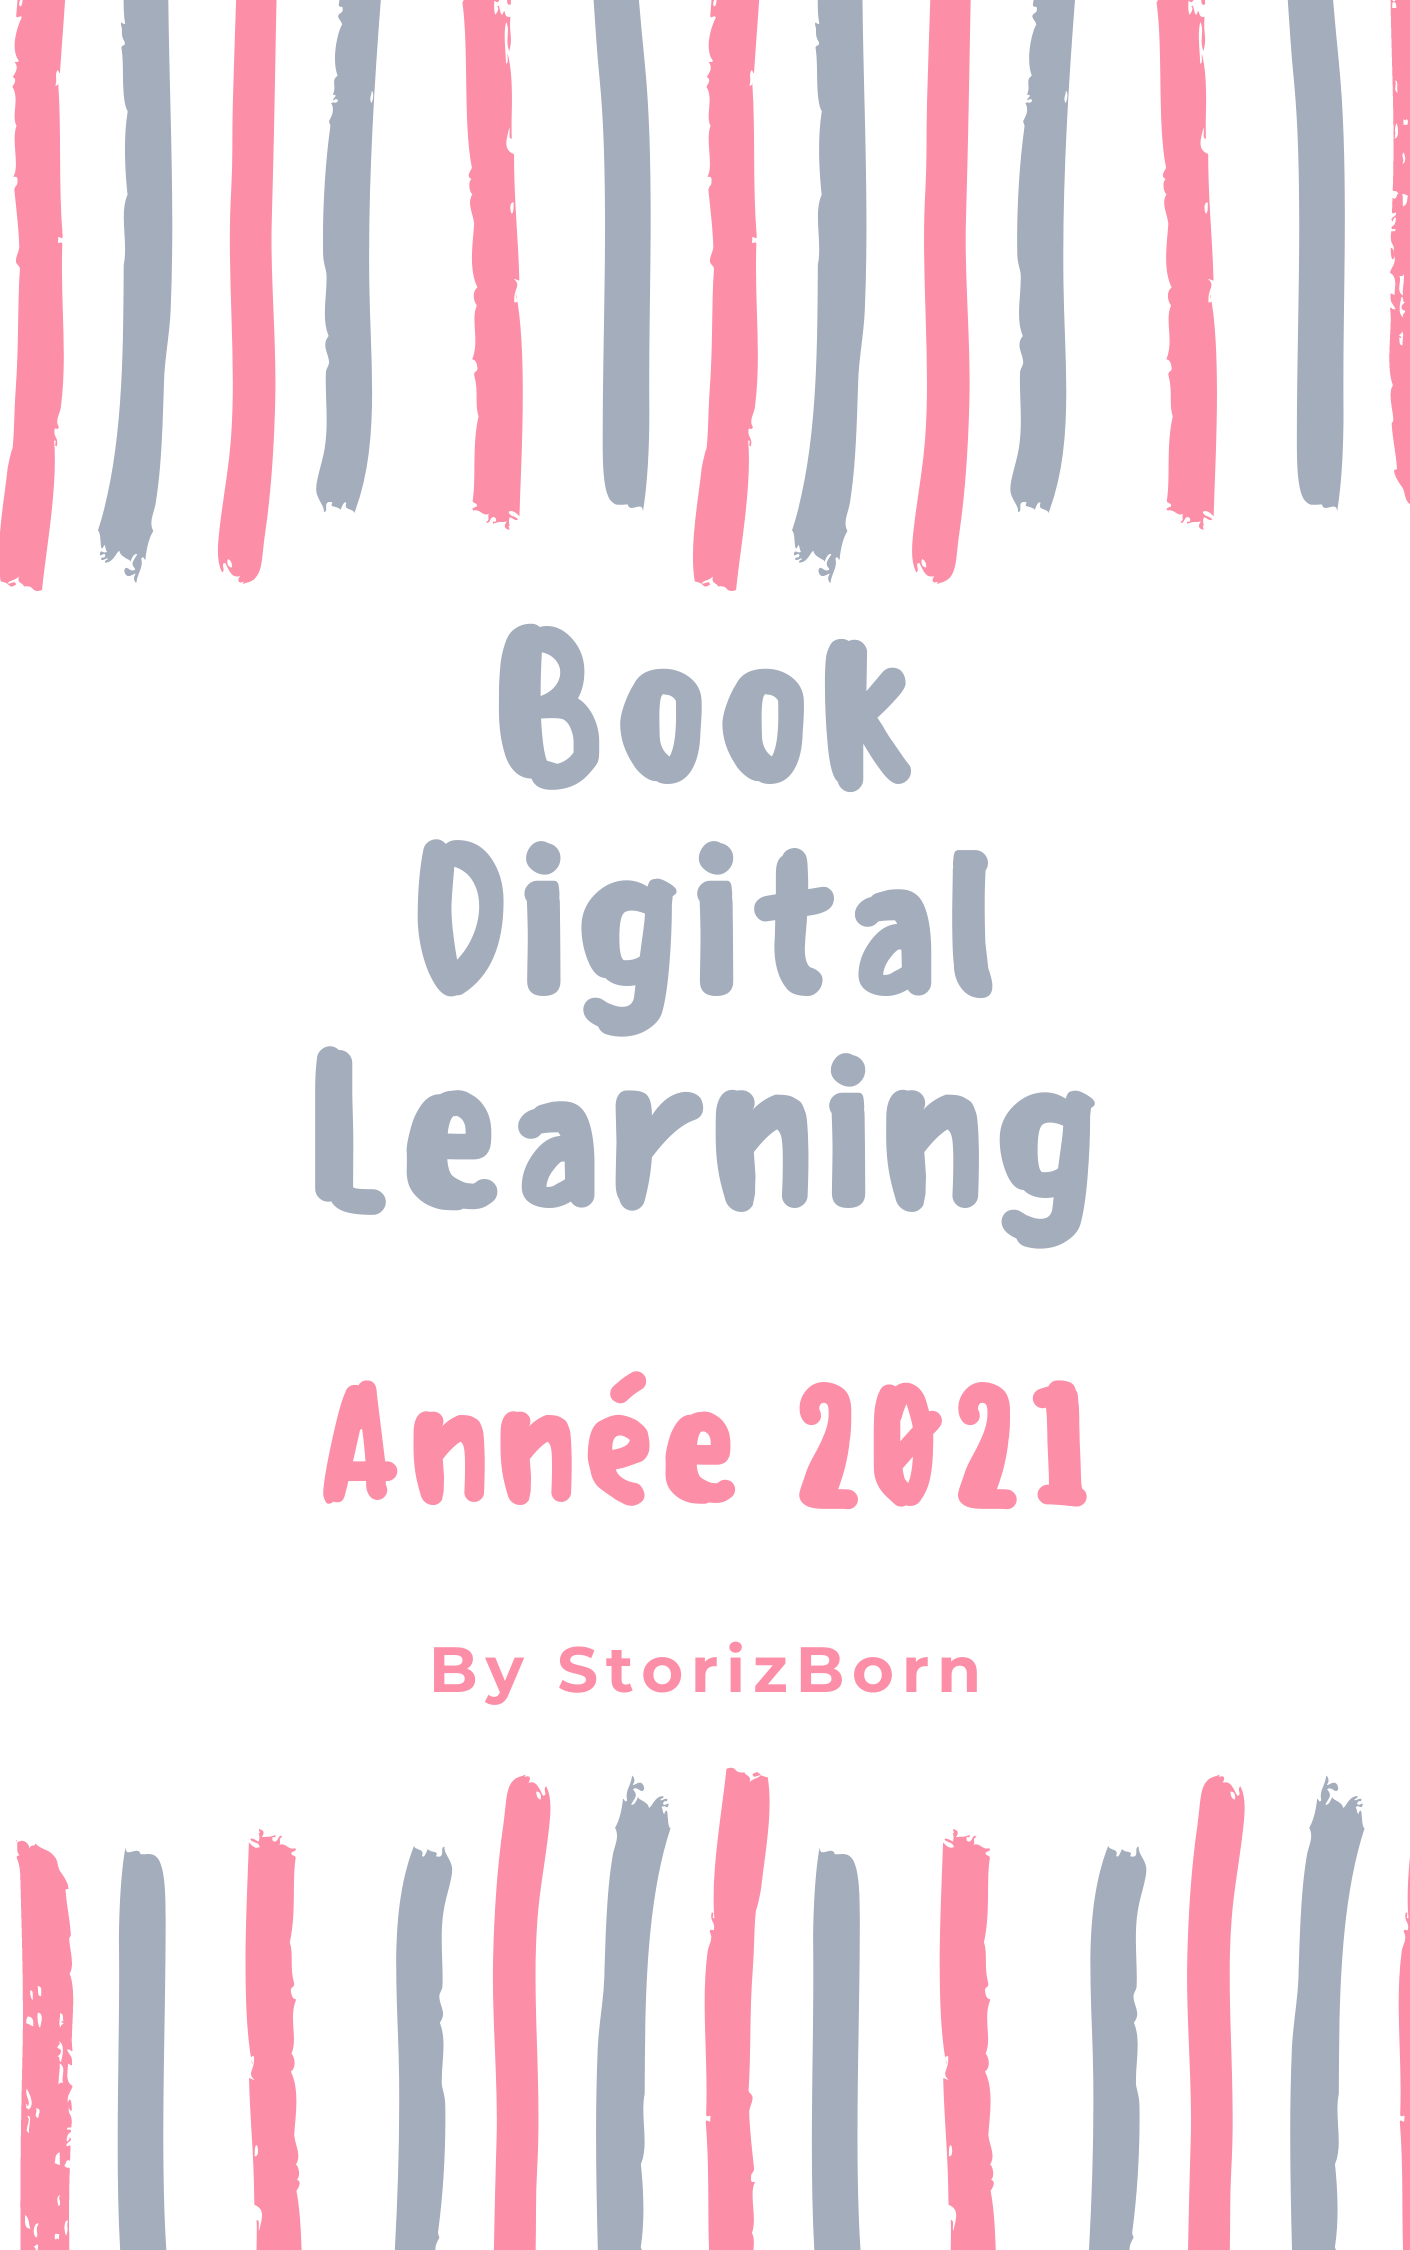  Book digital Learning - 2021